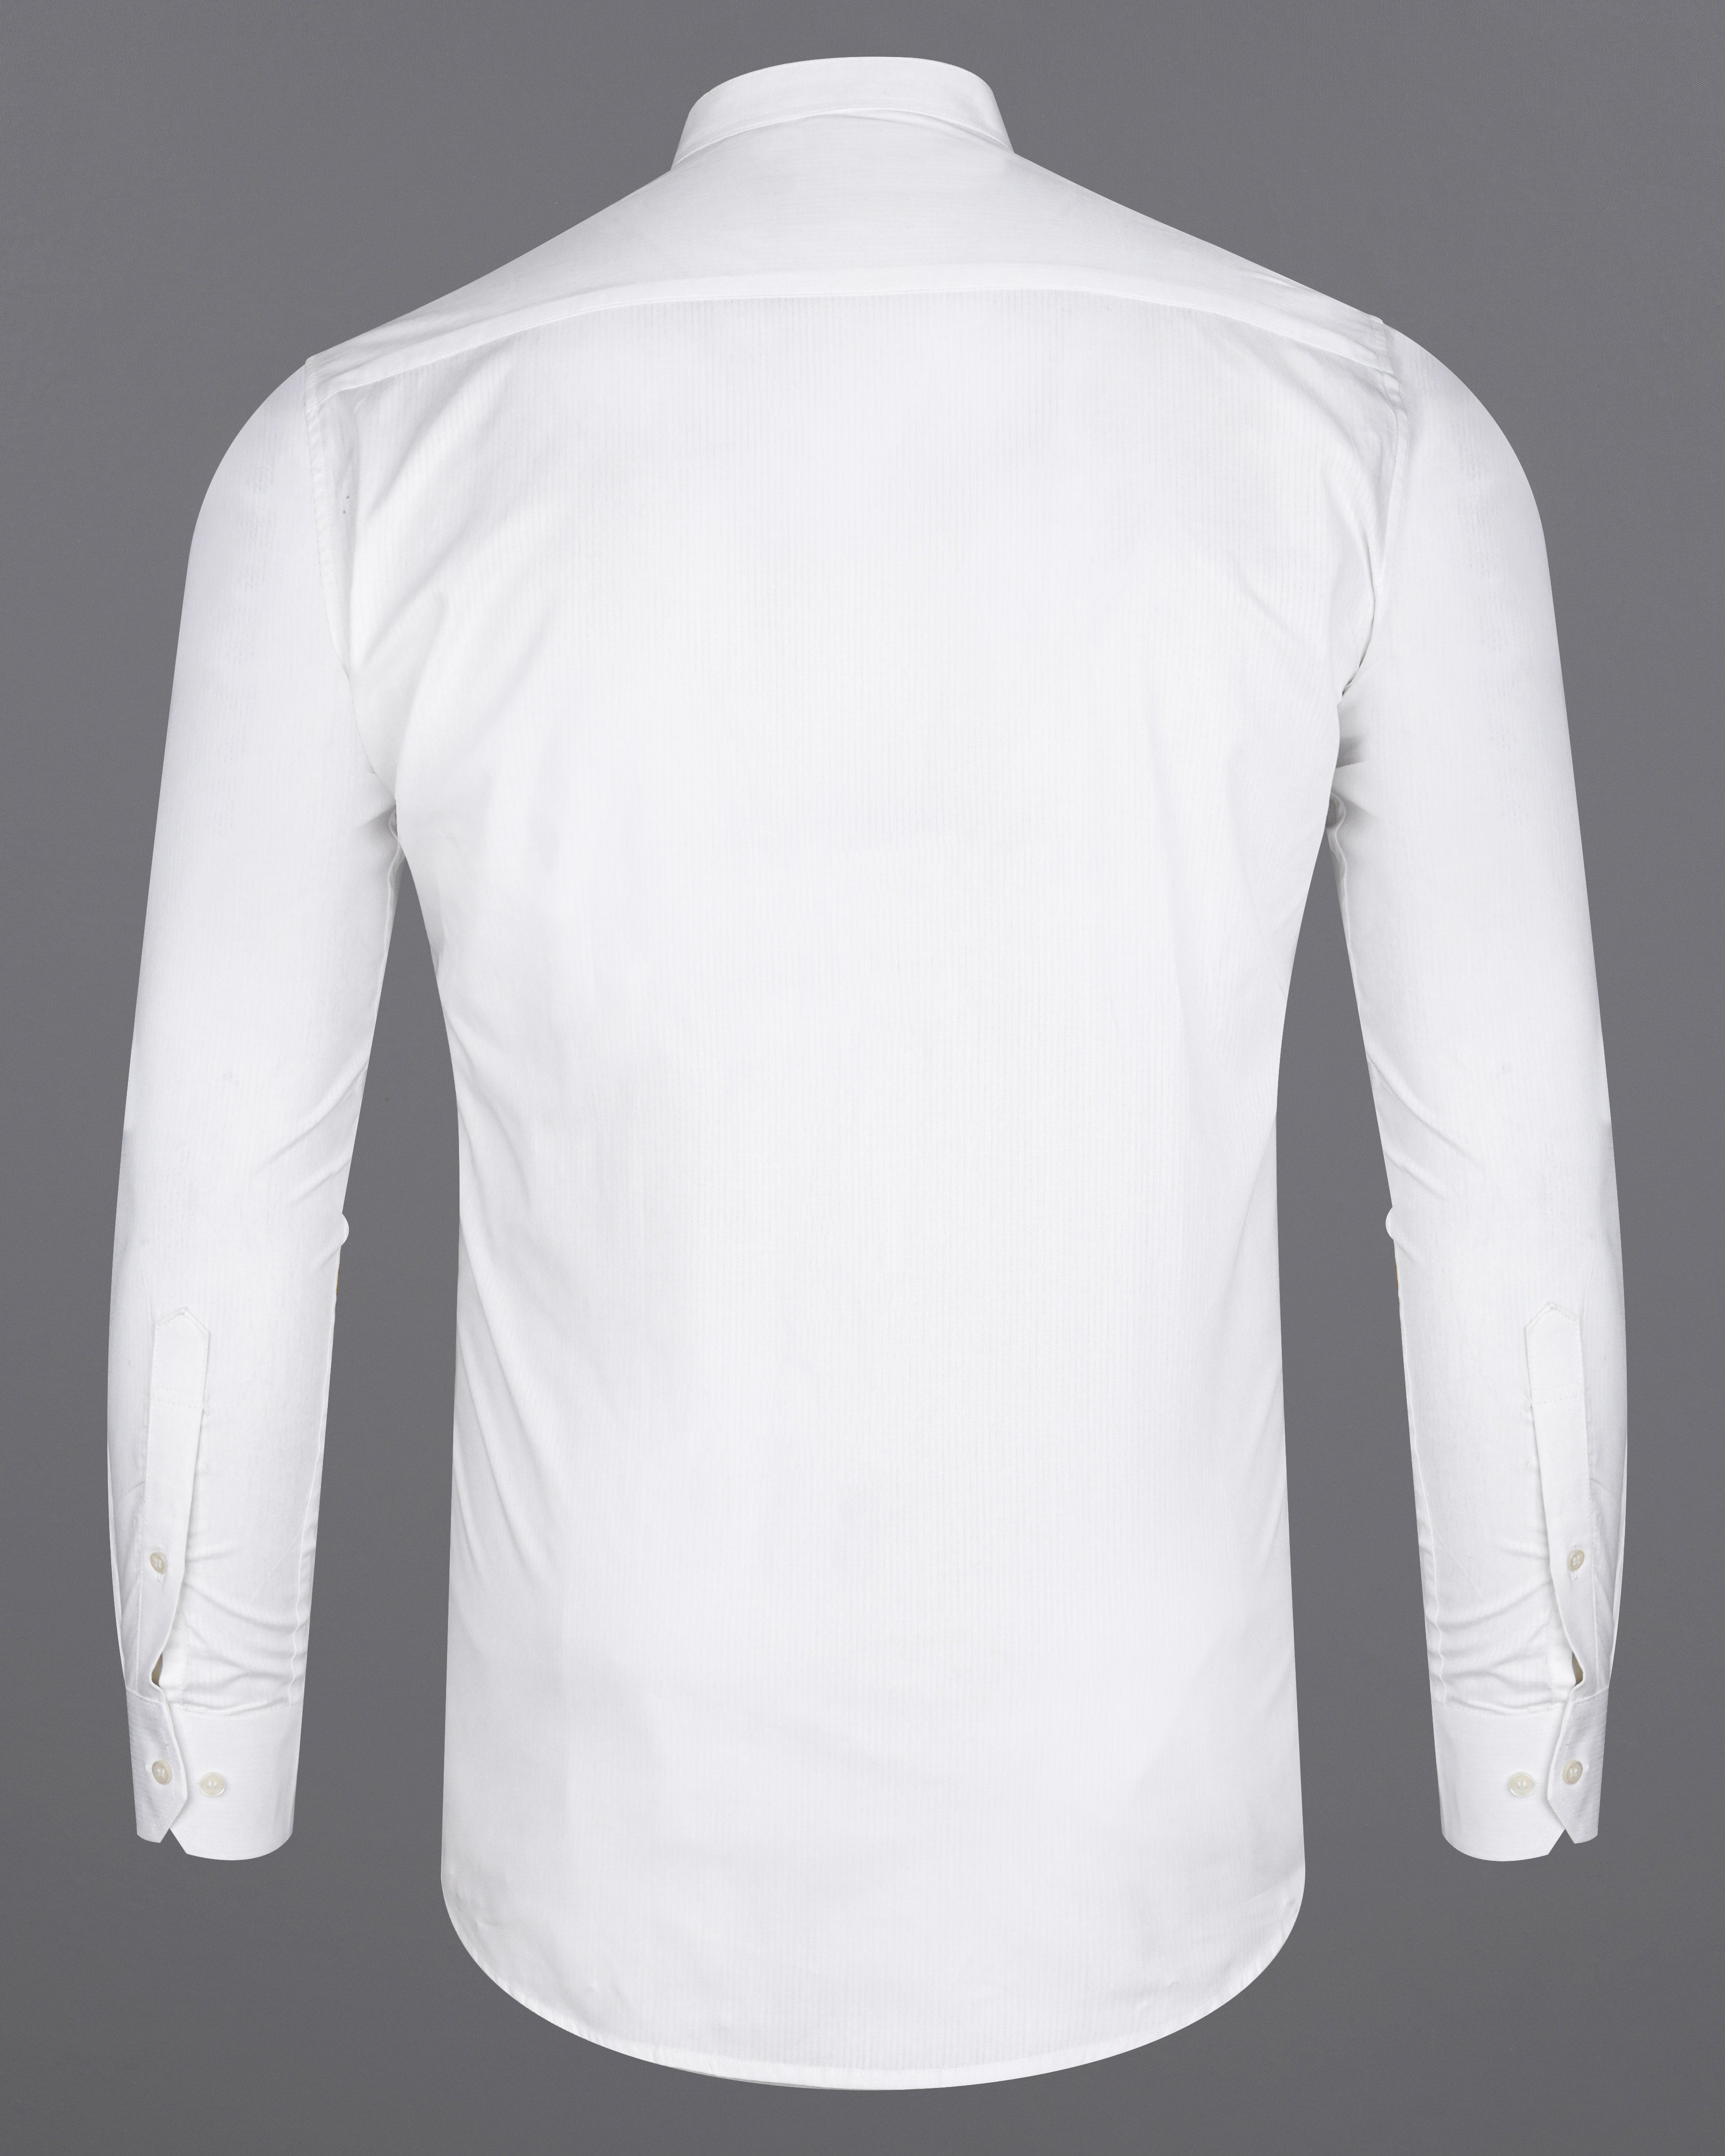 Bright White Dobby Textured Premium Giza Cotton Shirt 8454-M-38,8454-M-H-38,8454-M-39,8454-M-H-39,8454-M-40,8454-M-H-40,8454-M-42,8454-M-H-42,8454-M-44,8454-M-H-44,8454-M-46,8454-M-H-46,8454-M-48,8454-M-H-48,8454-M-50,8454-M-H-50,8454-M-52,8454-M-H-52